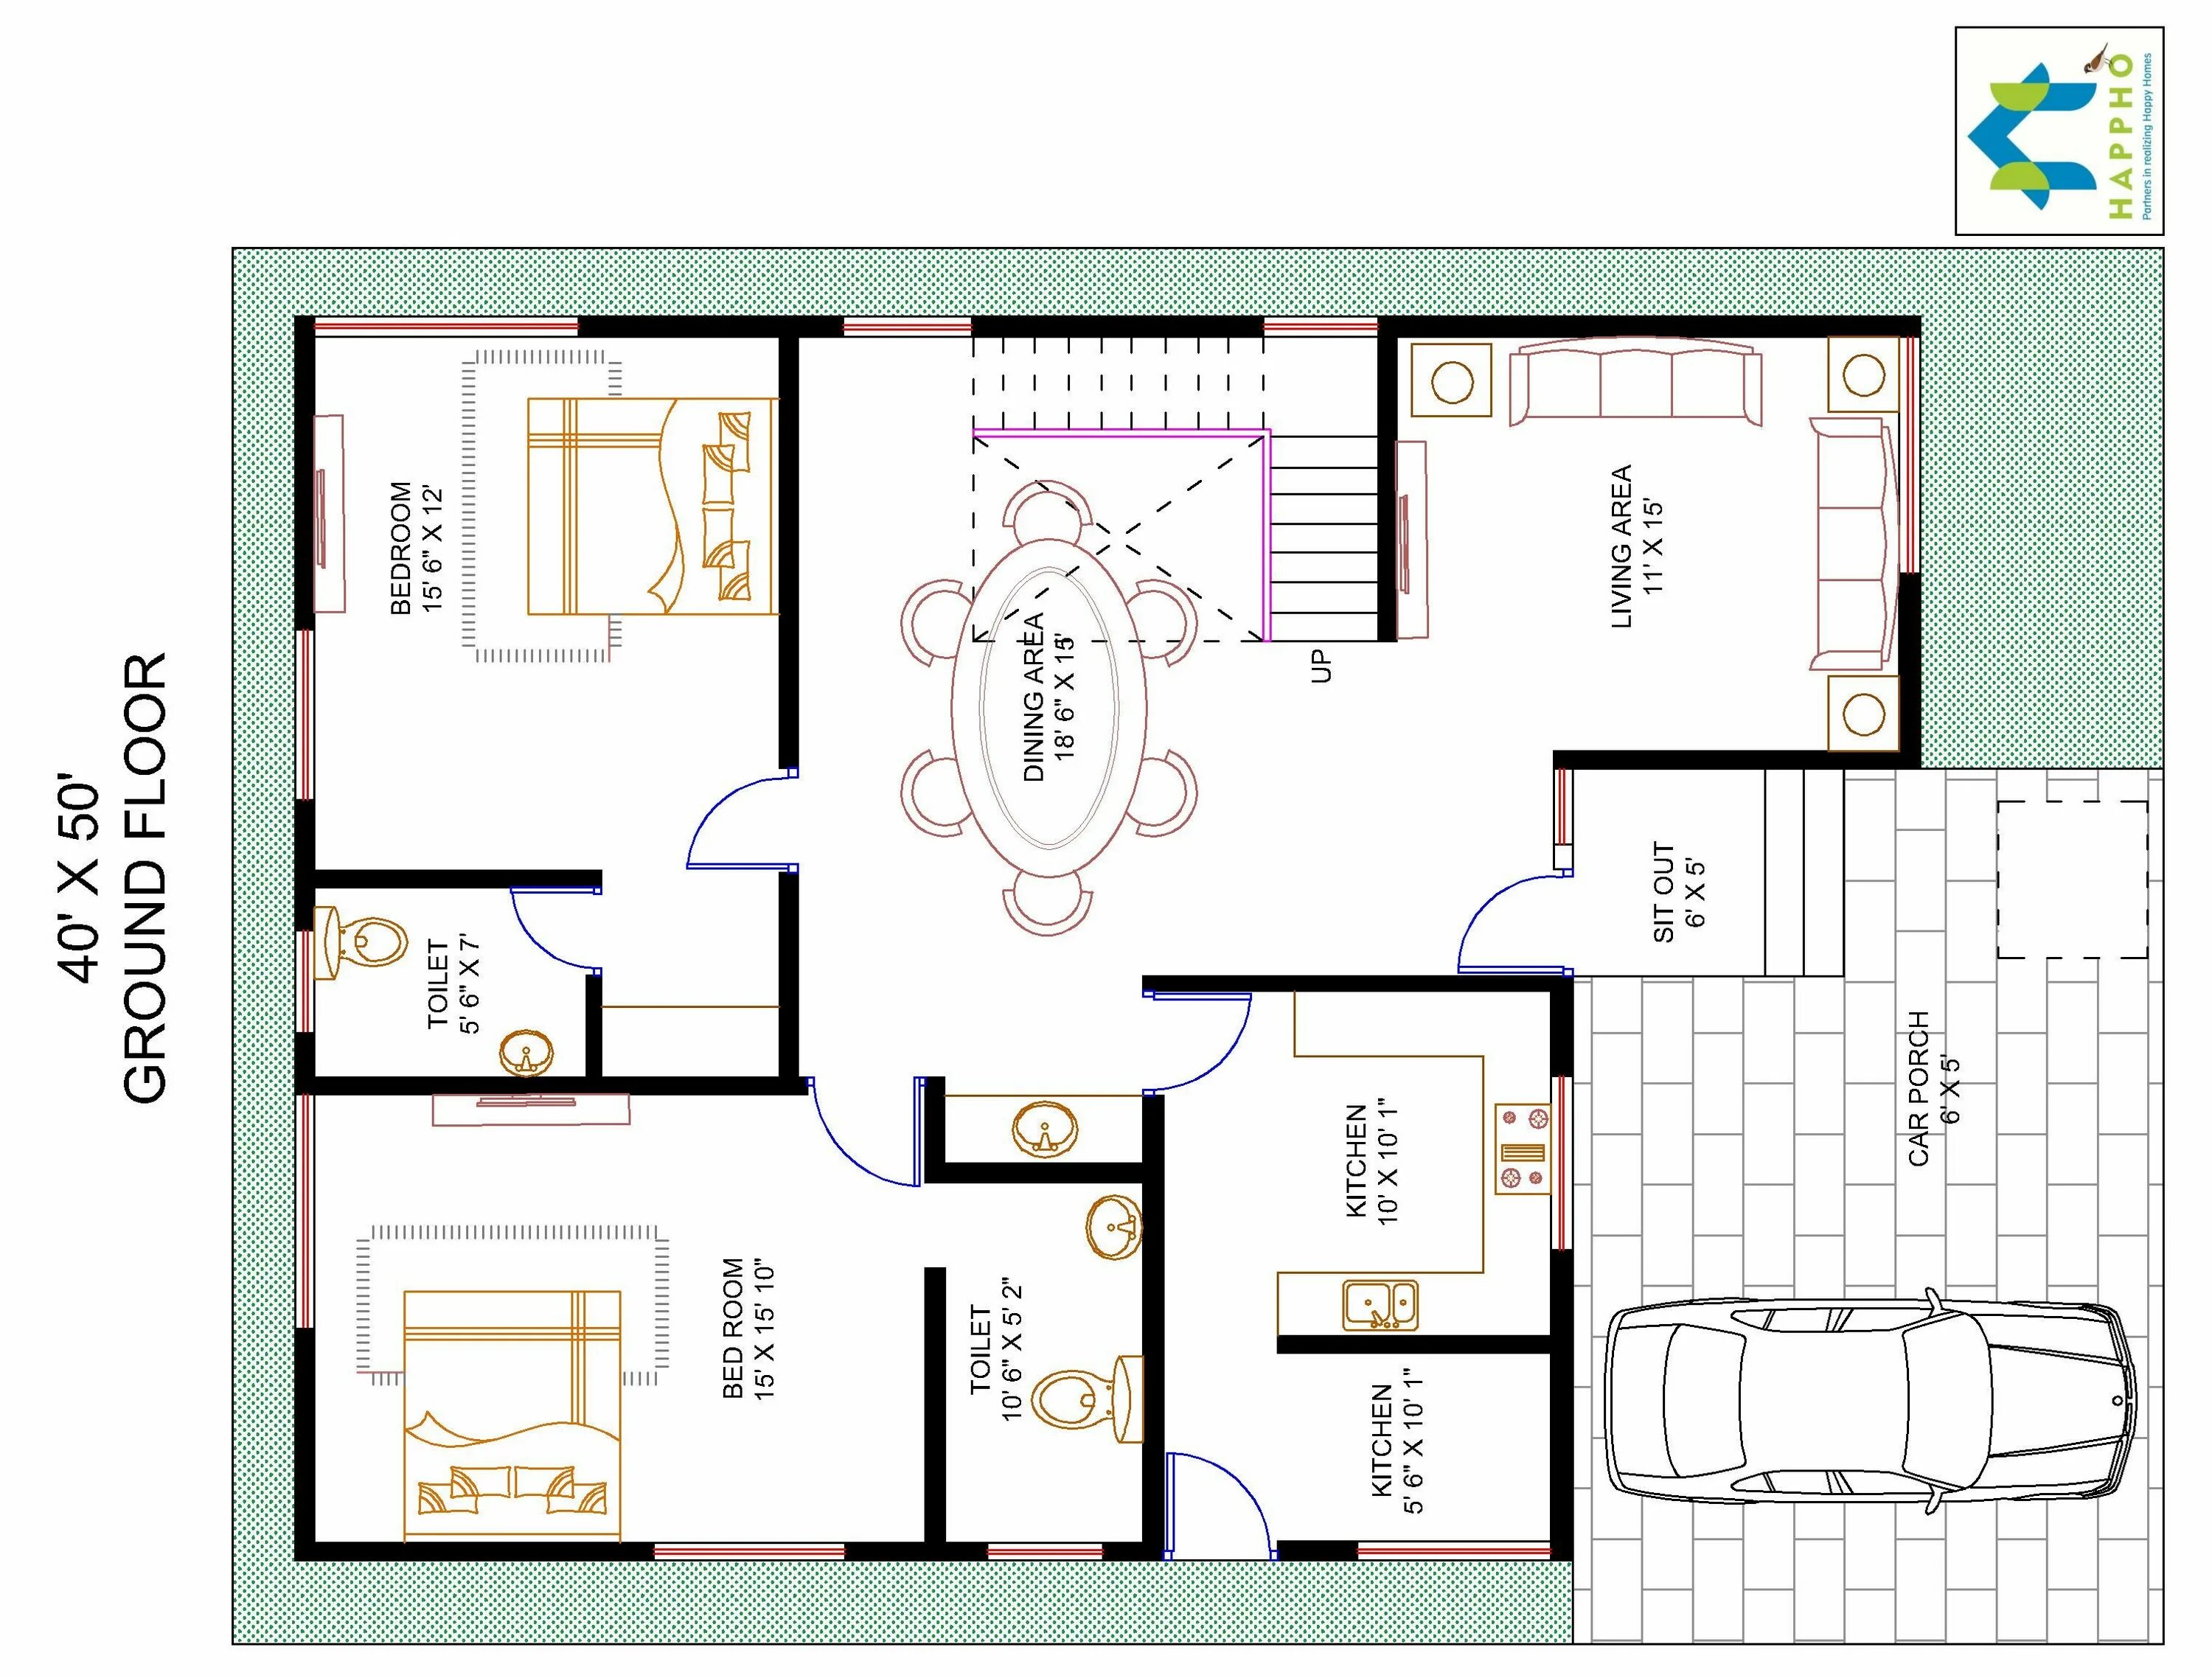 Plan 50. Duplex House Floor Plan. Small House Duplex Plans. Modern Duplex House Floor Plan.